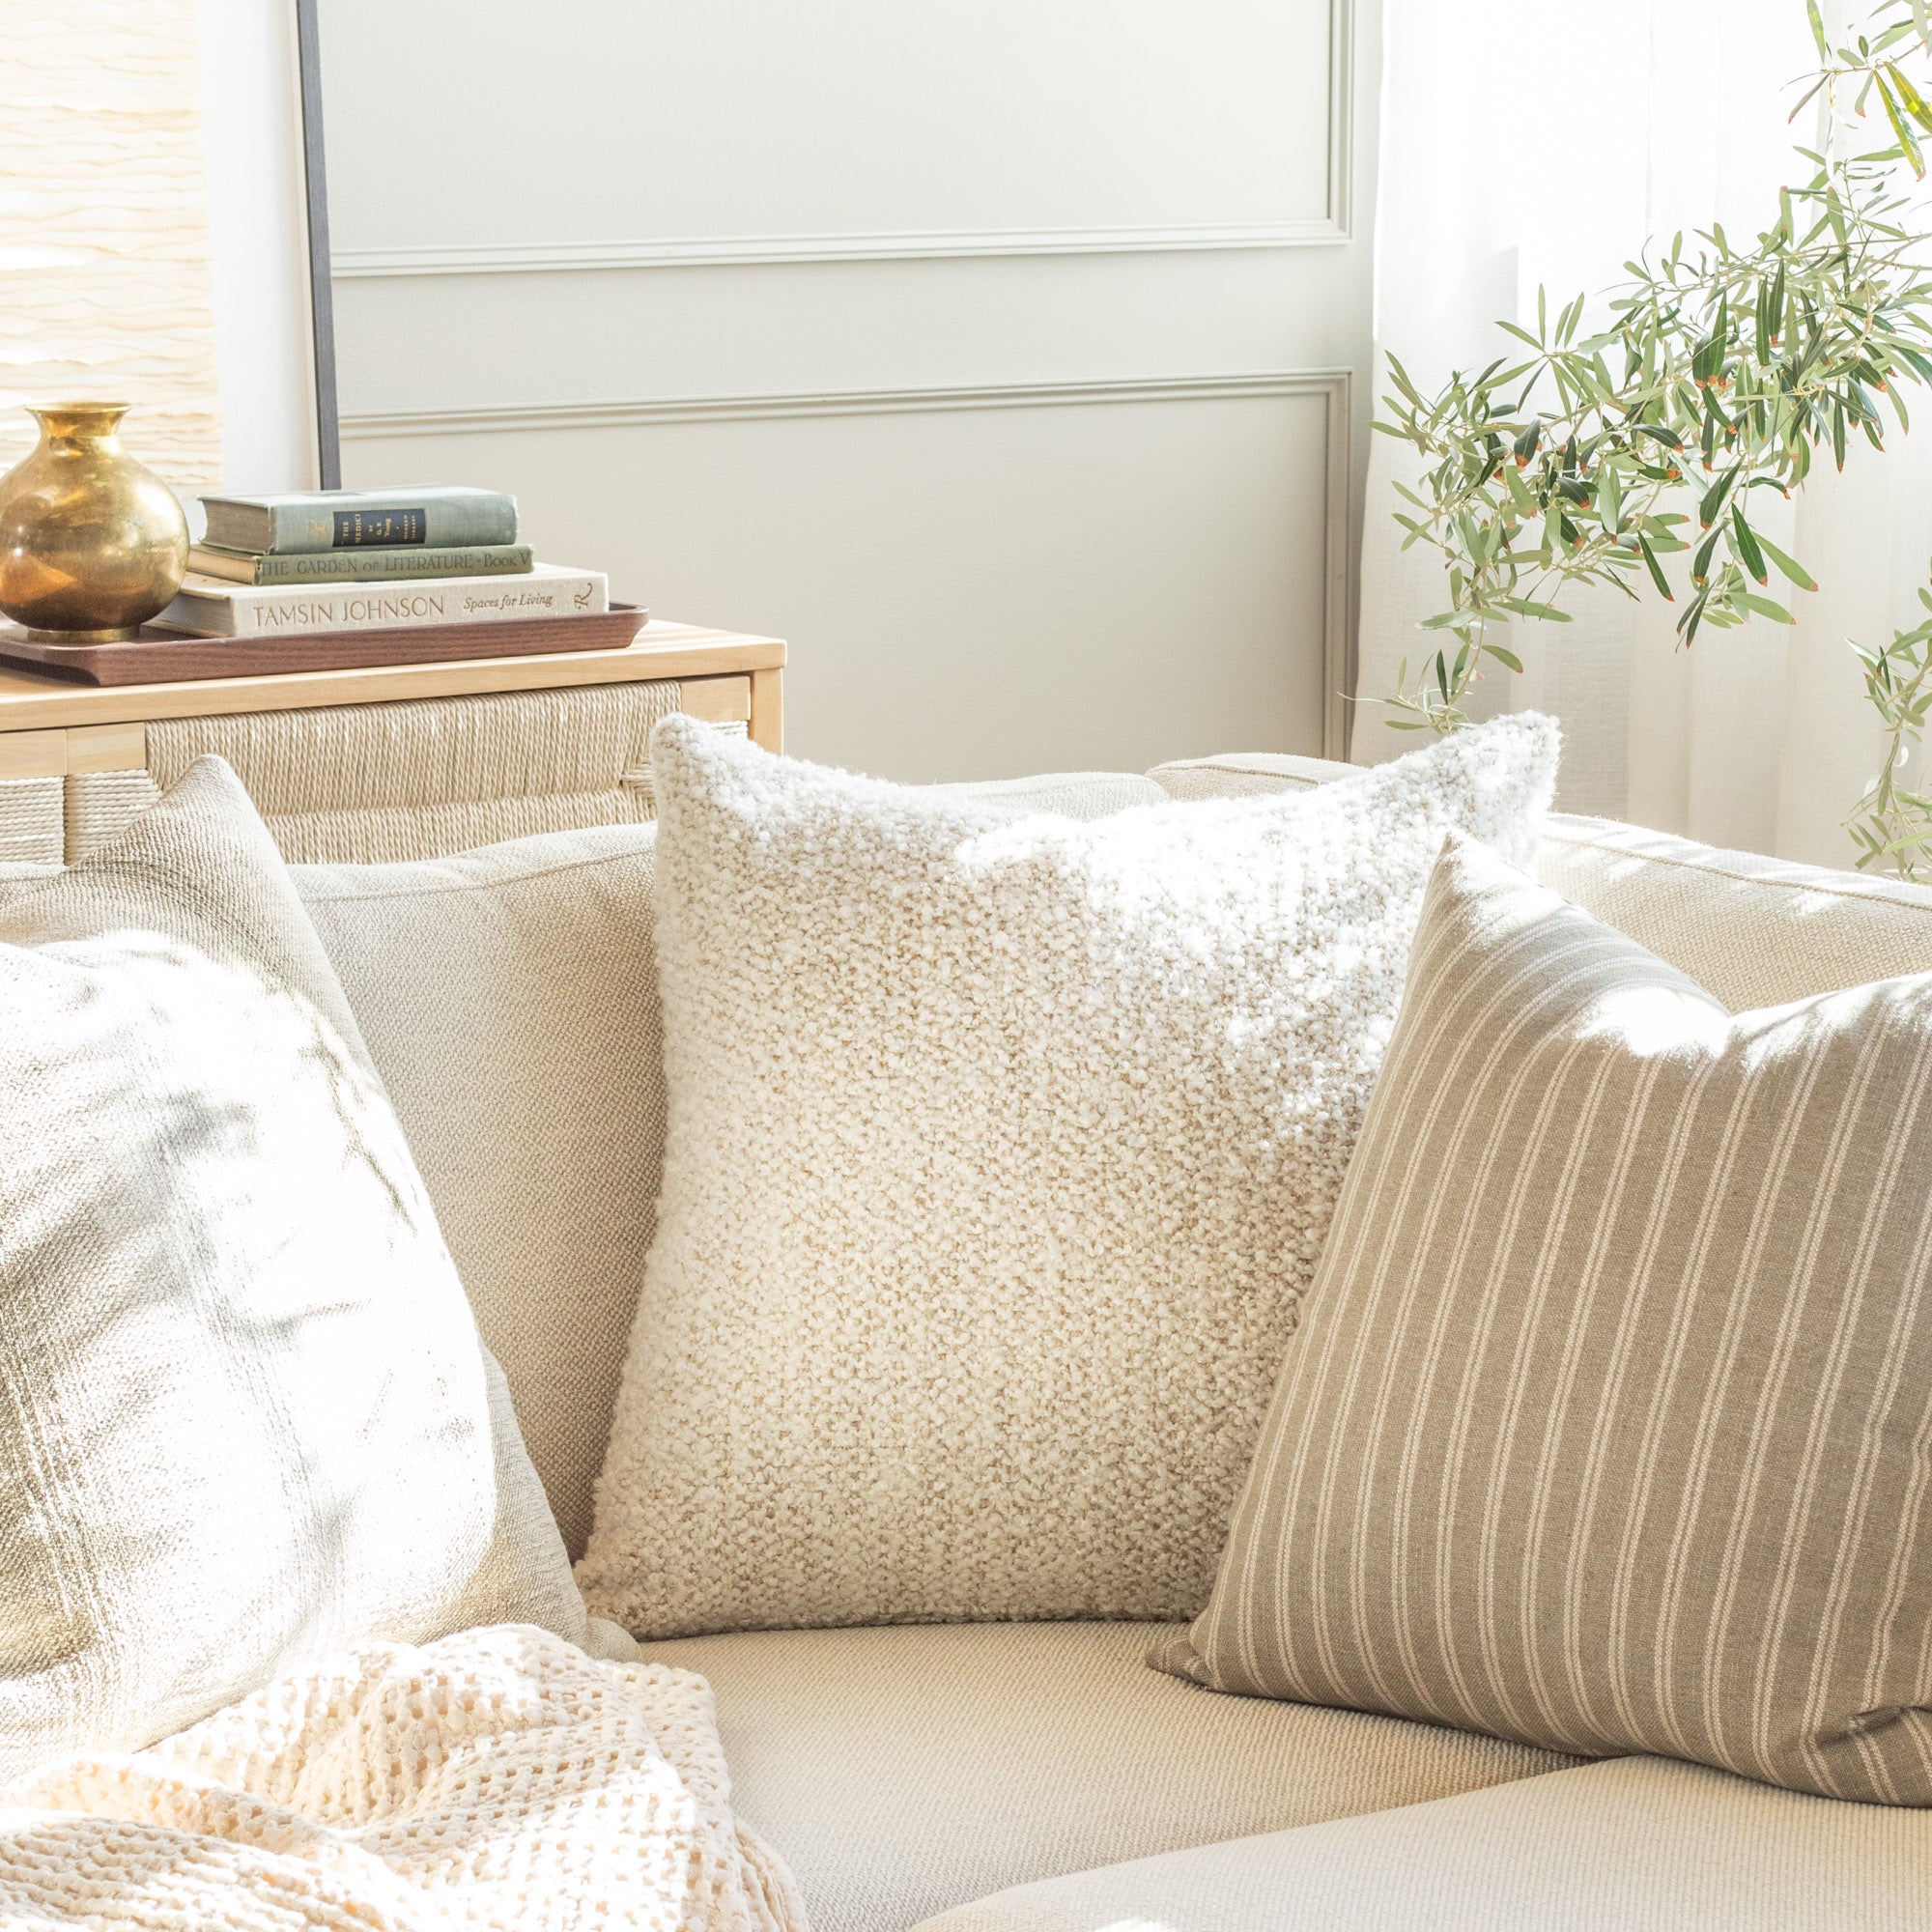 Throw Pillows for Home Decor - Tonic Living